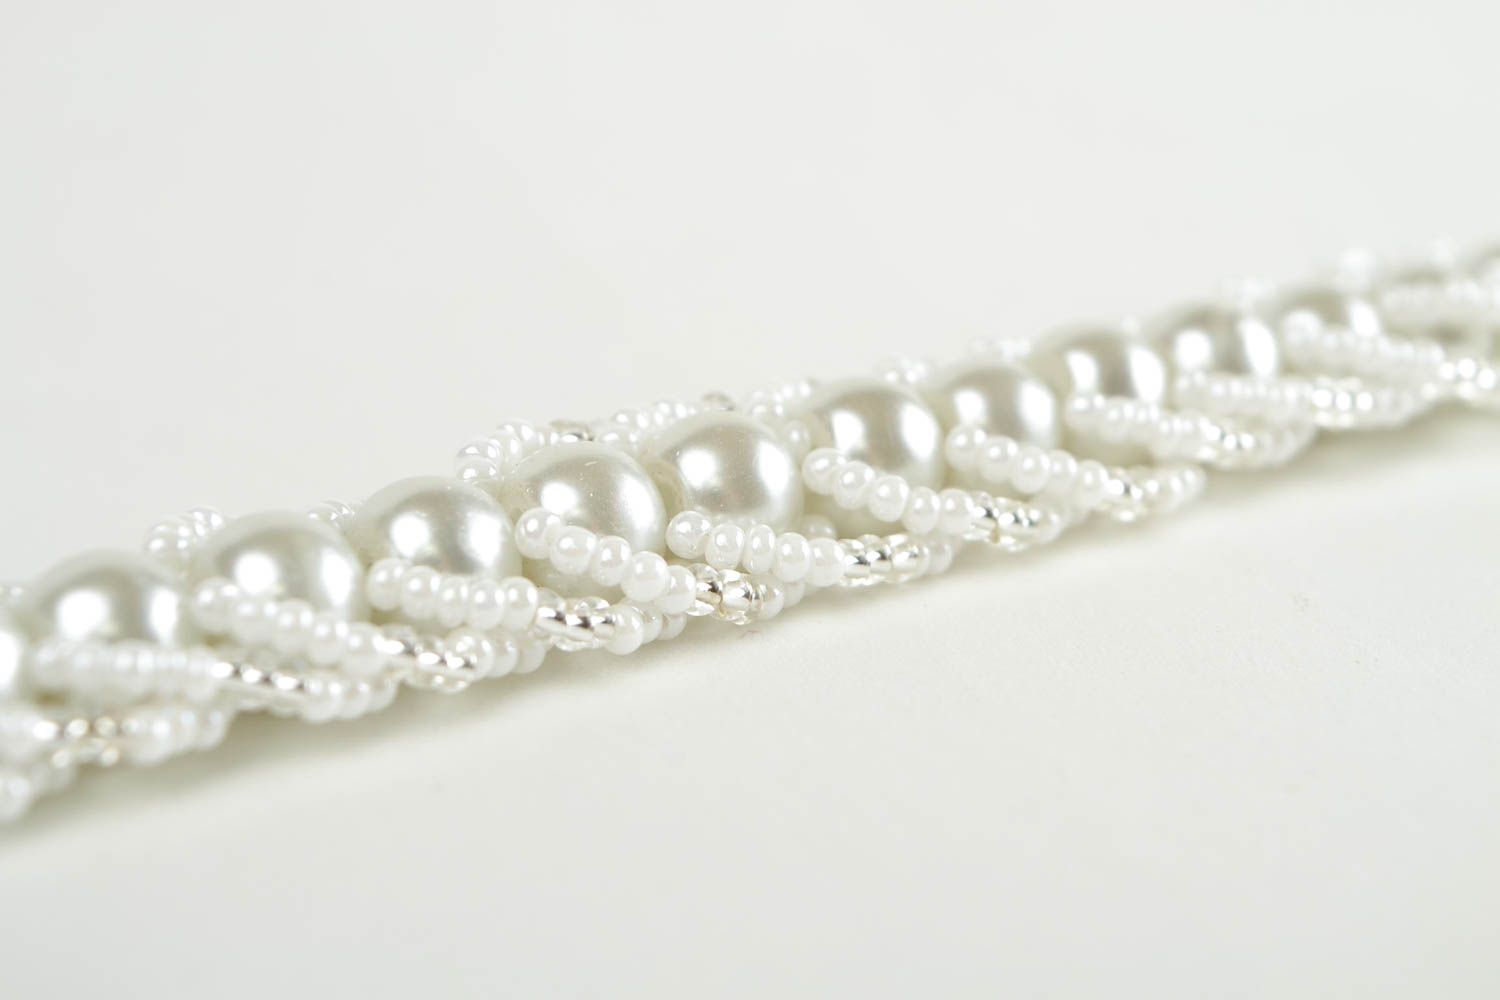 Handmade bracelet designer accessory gift ideas beads jewelry bead bracelet photo 4